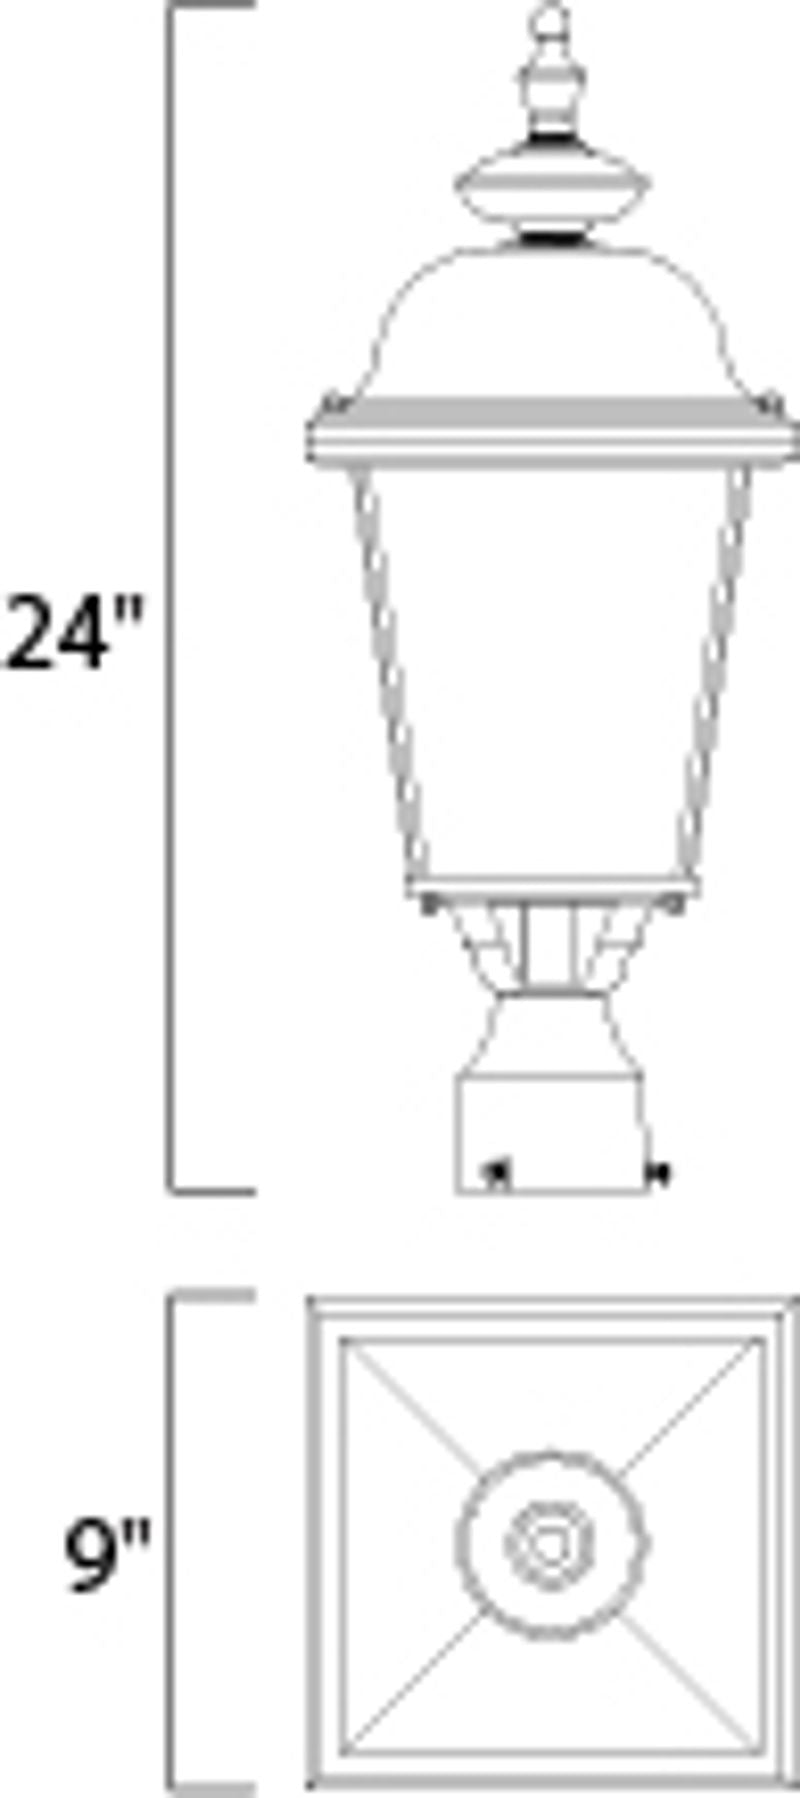 Builder Cast 24' 3 light Outdoor Pole/Post Mount in Black